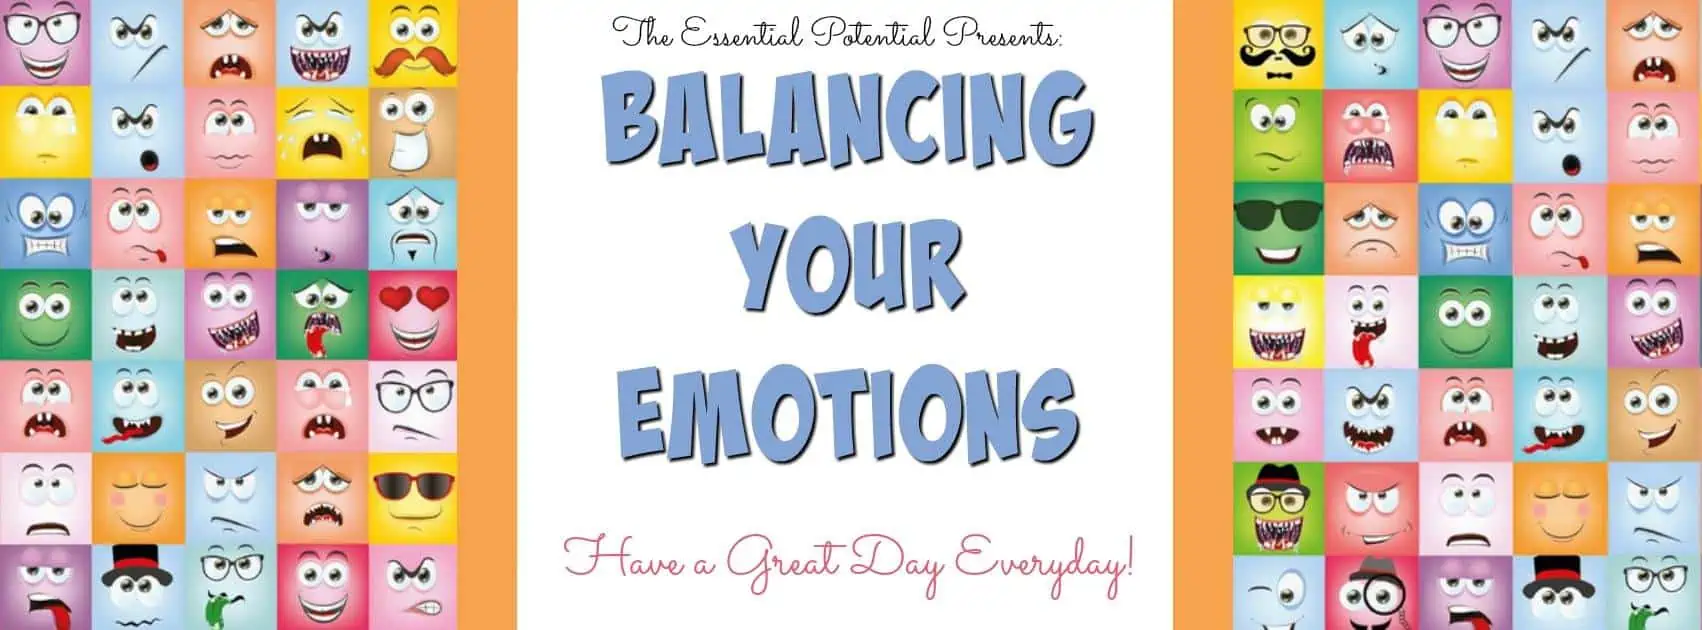 Balancing Your Emotions Naturally